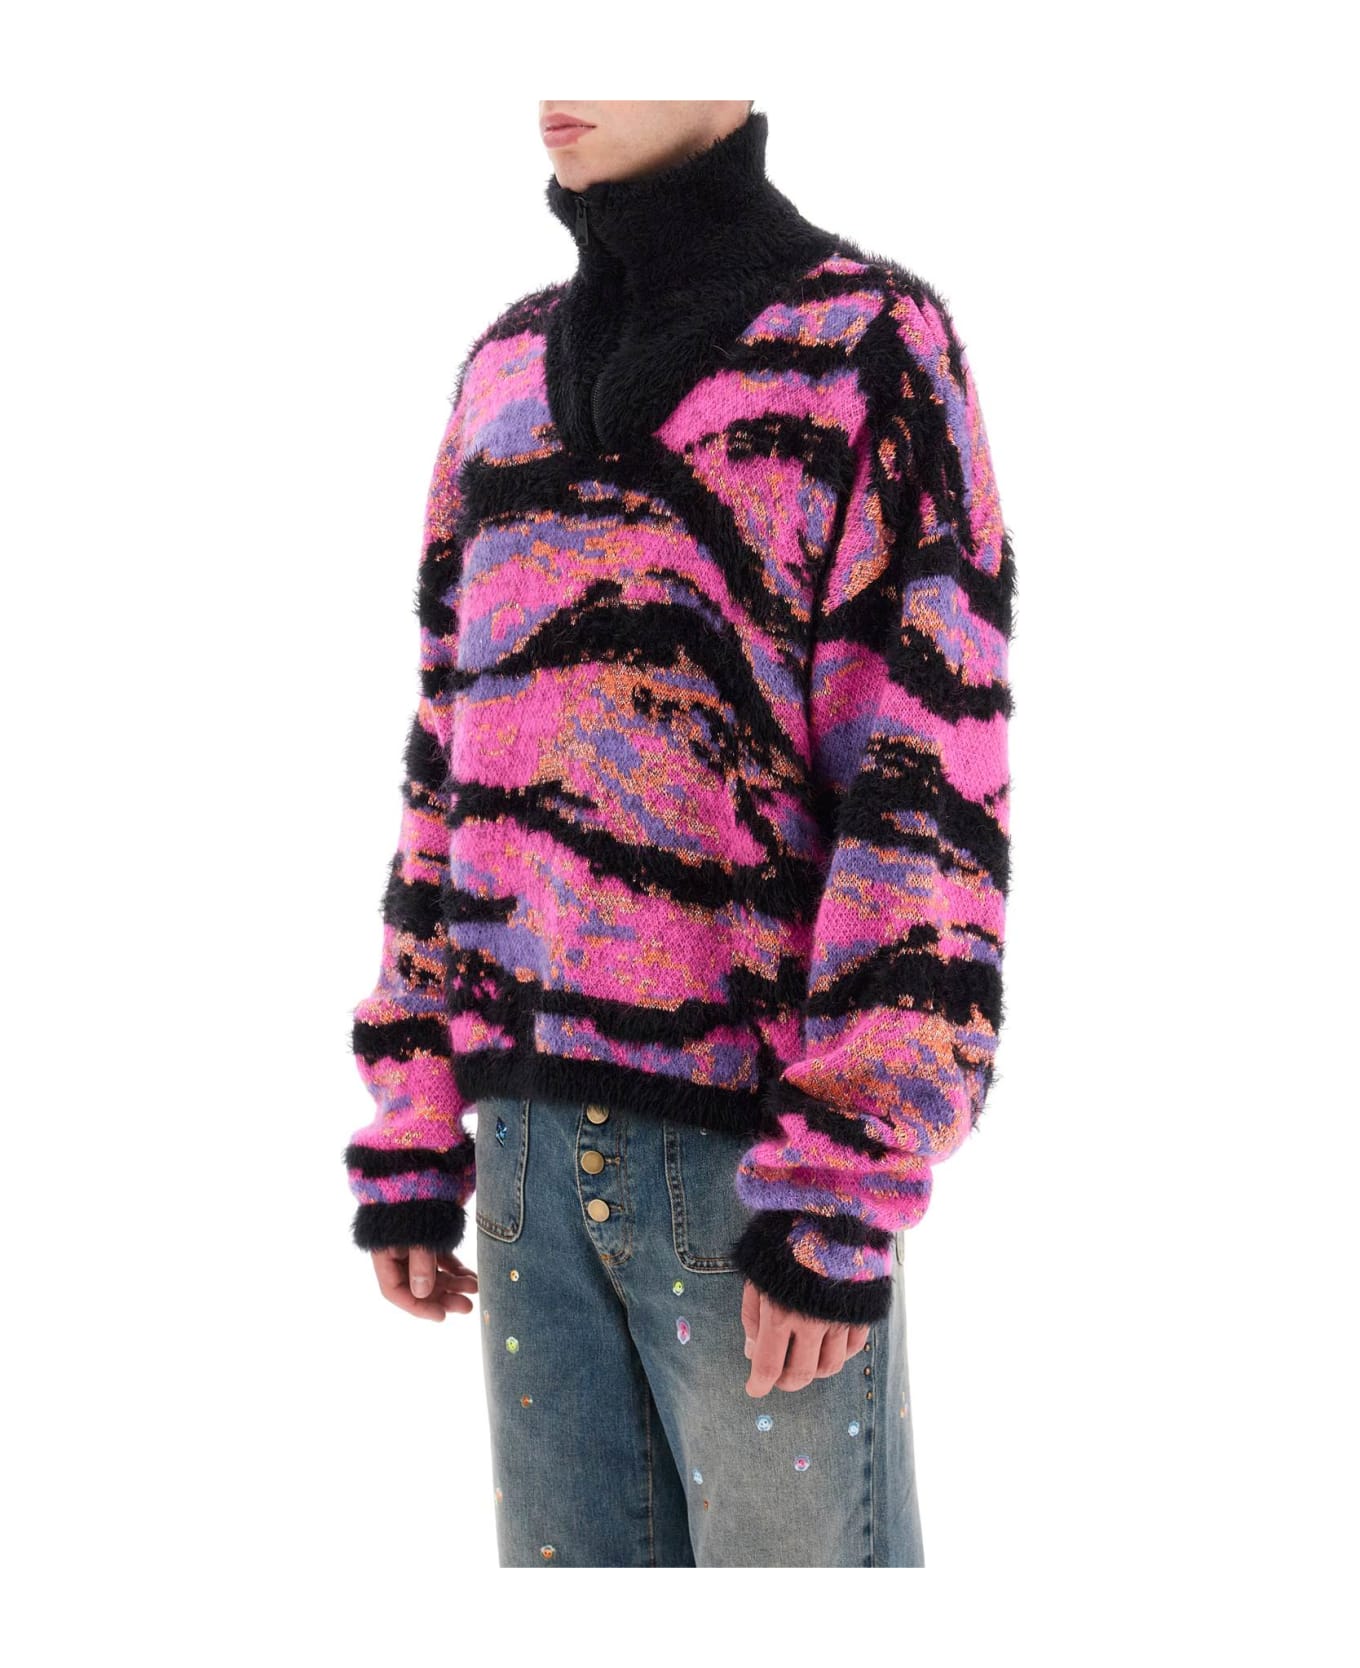 ERL Jacquard Turtleneck Sweater - ERL PINK RAVE CAMO 1 (Black) フリース